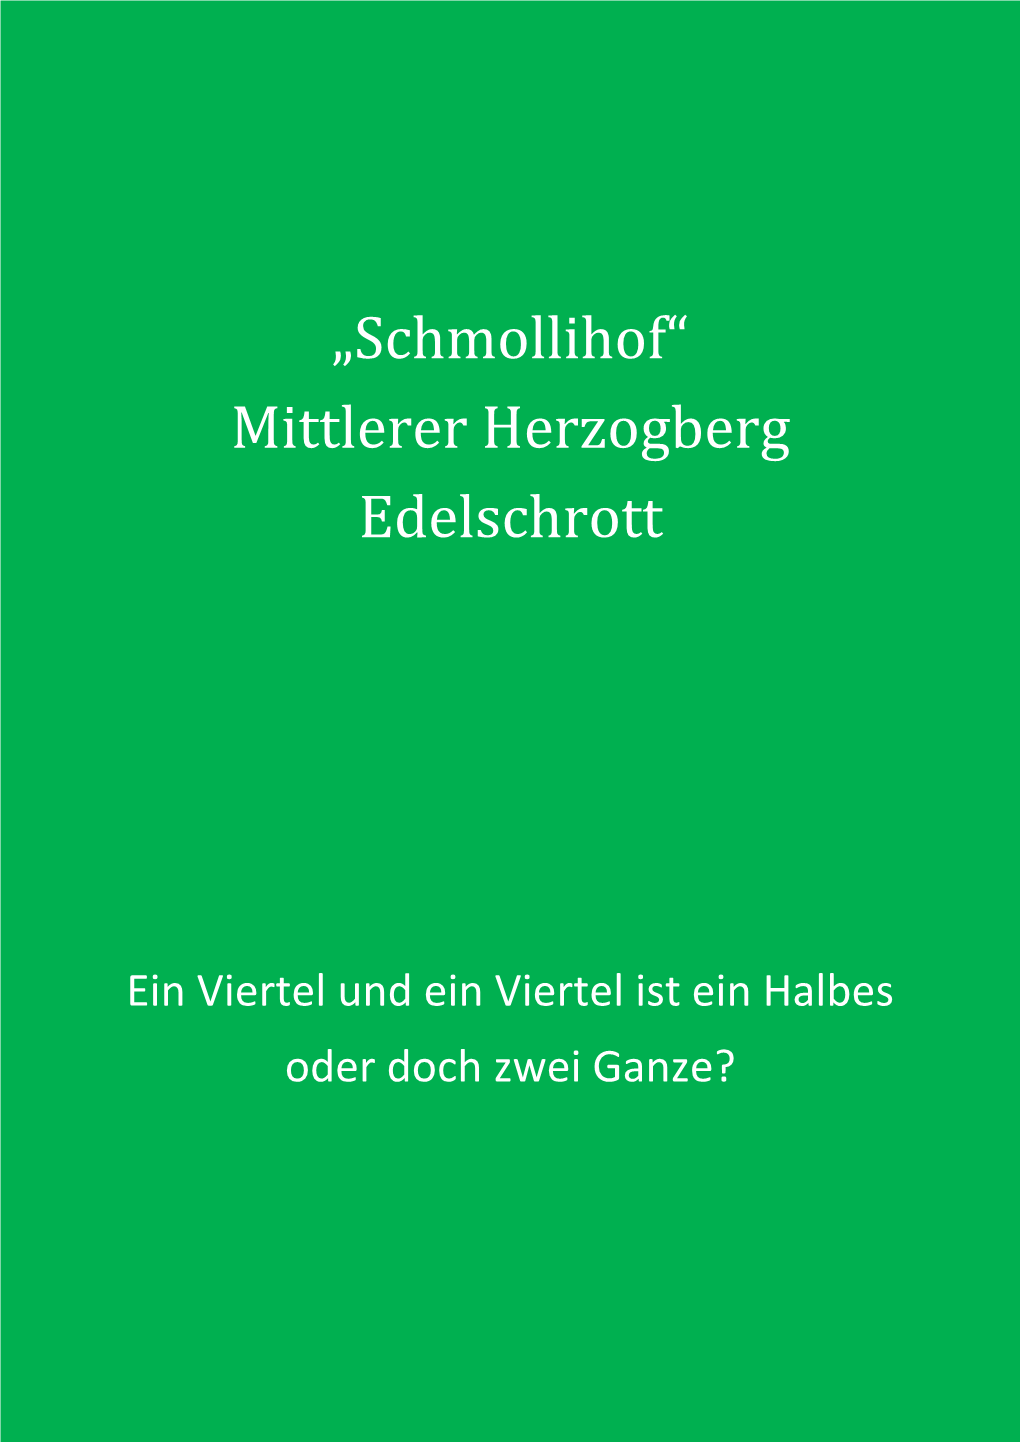 „Schmollihof“ Mittlerer Herzogberg Edelschrott